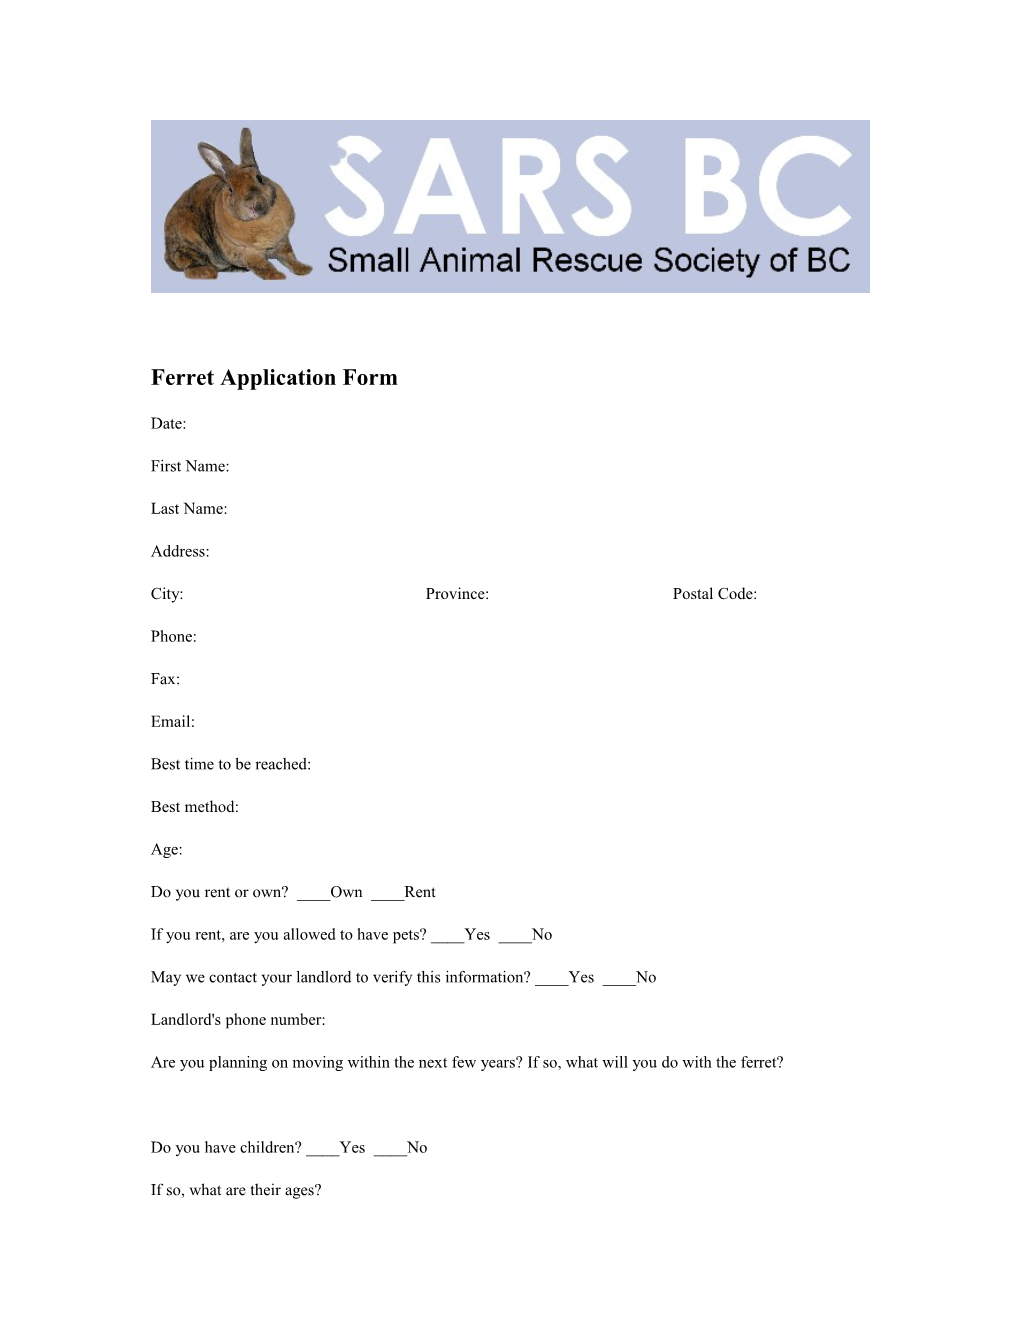 Ferret Application Form